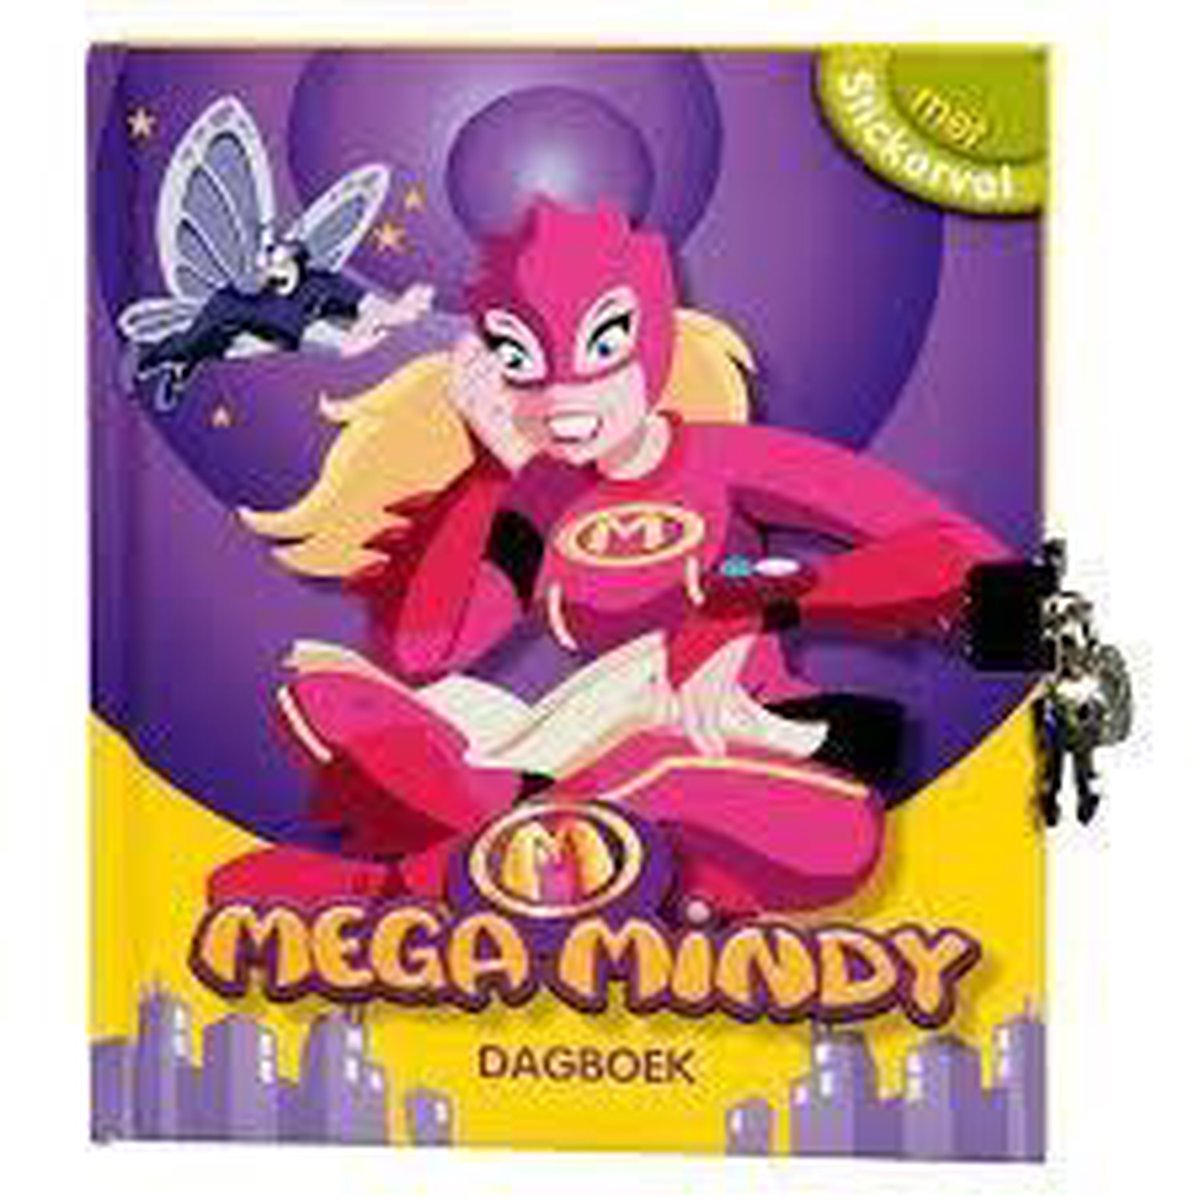 Mega Mindy: Dagboek